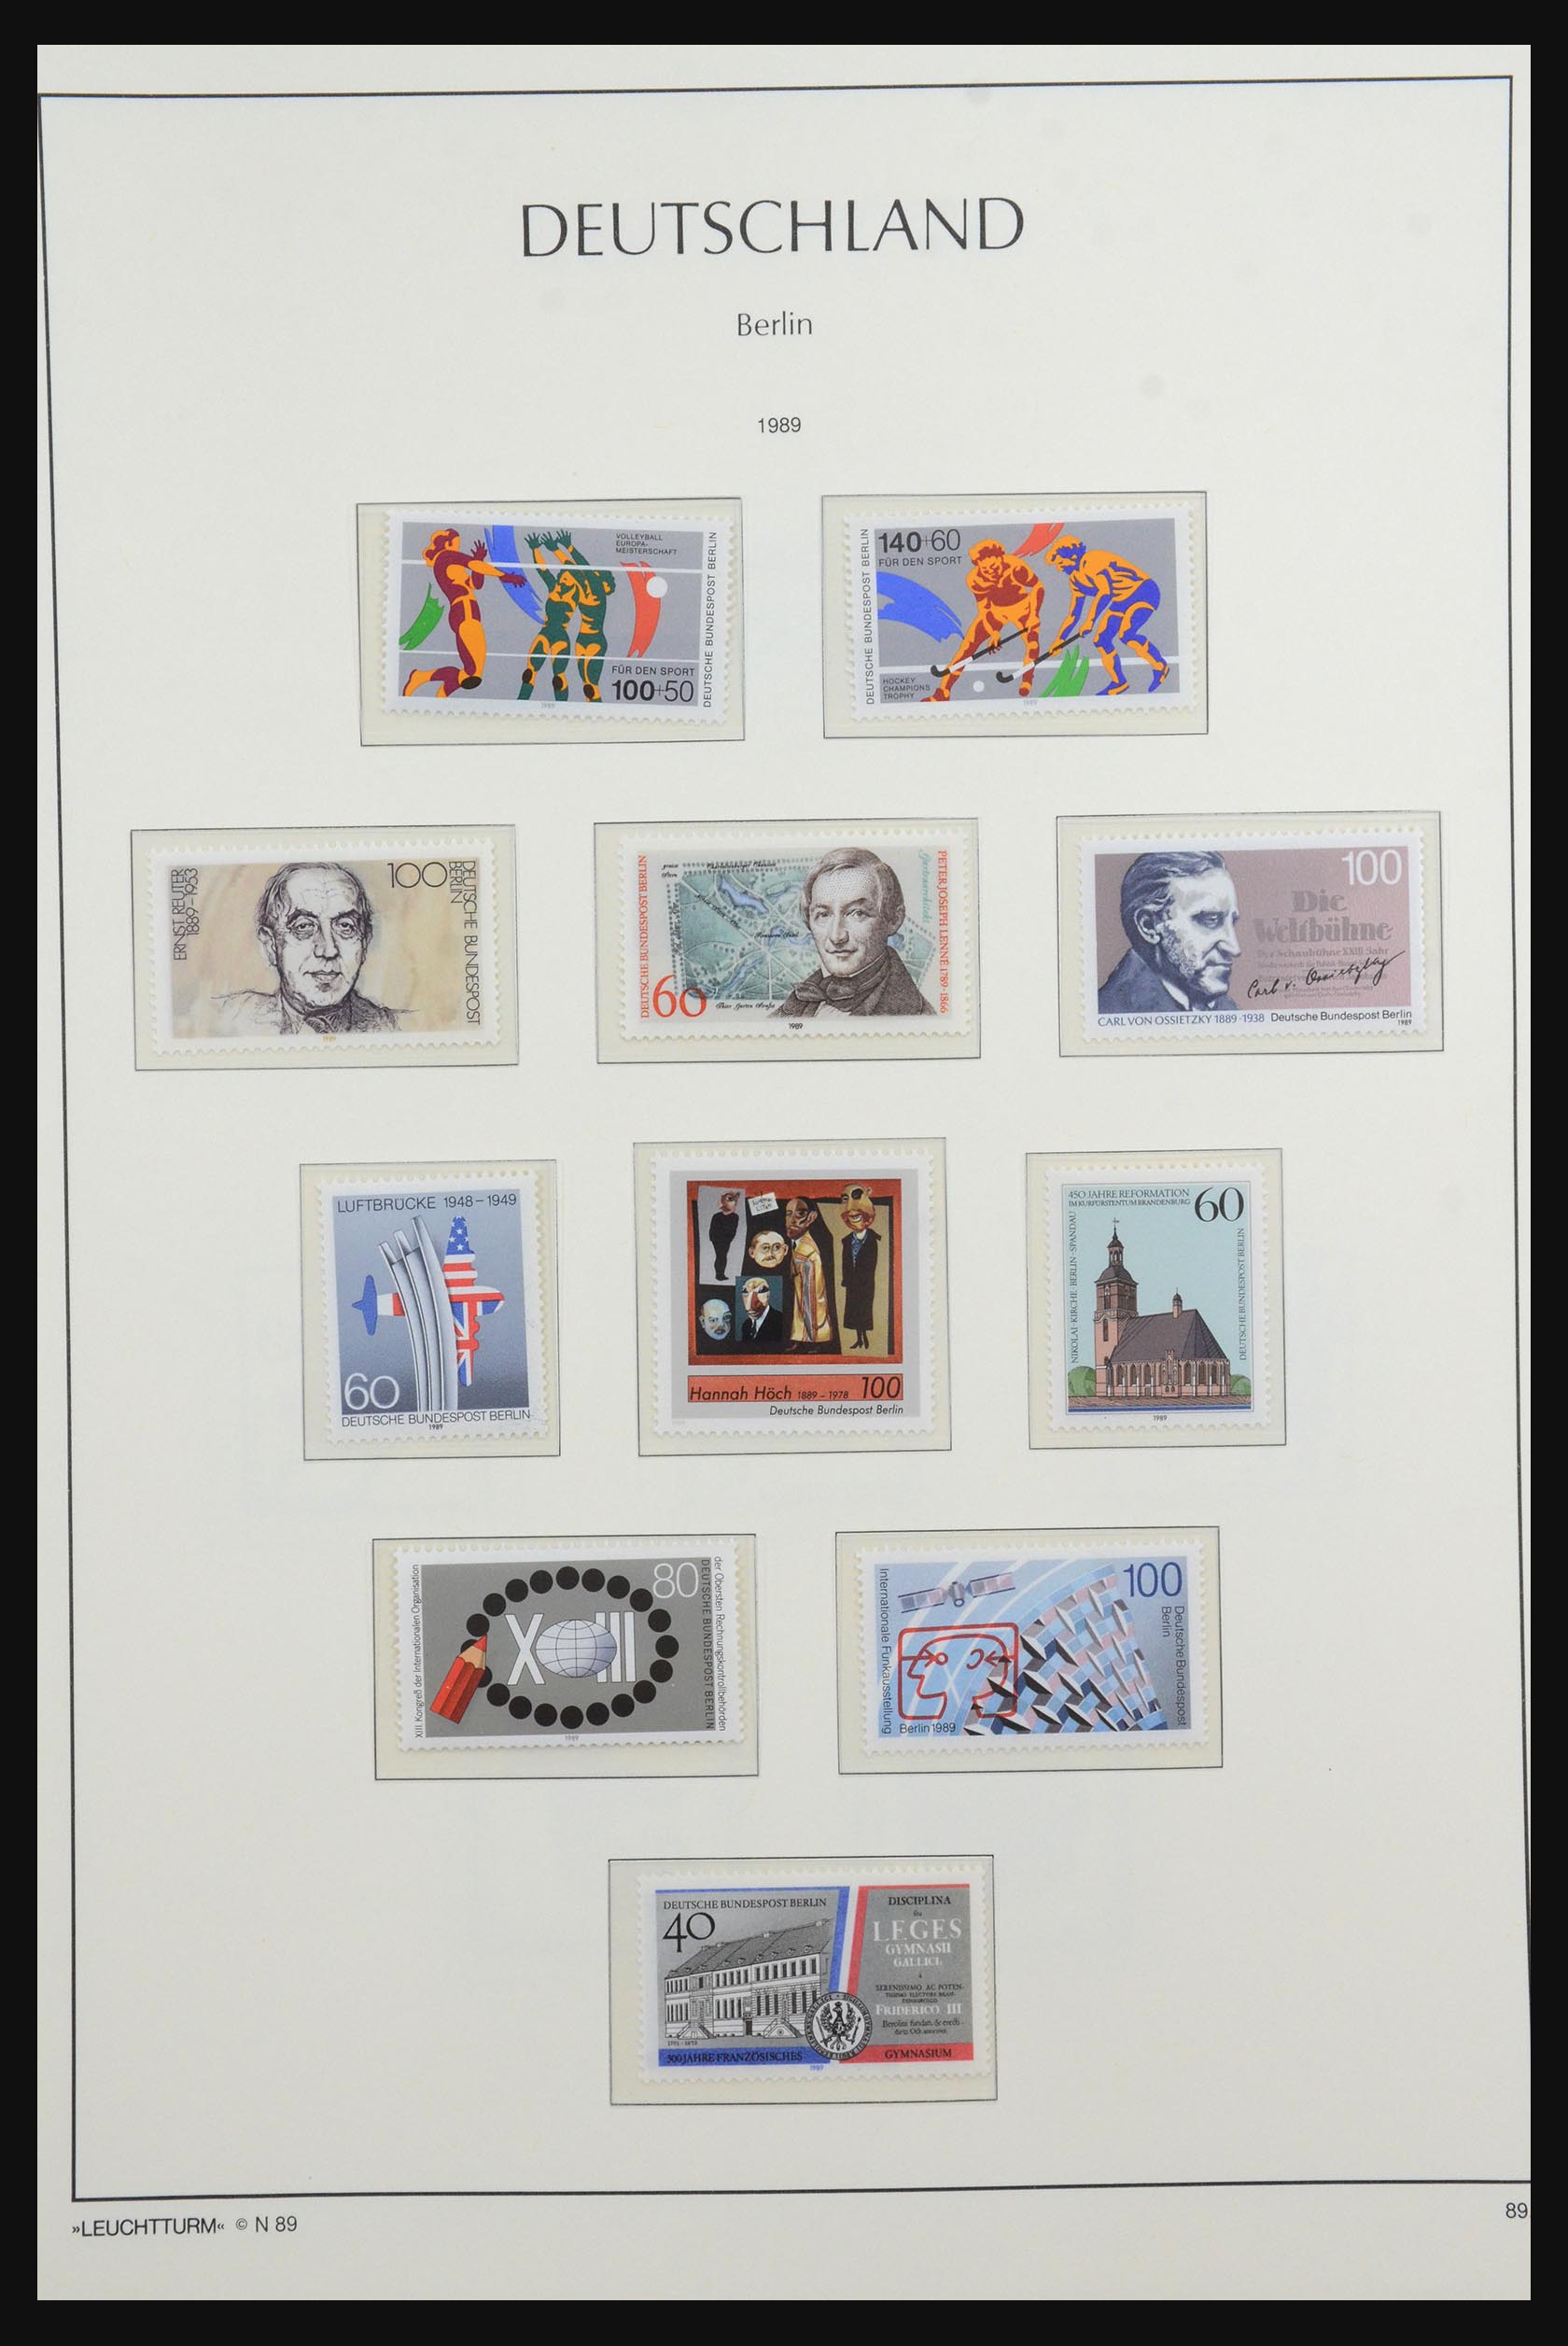 31601 081 - 31601 Bundespost, Berlin and Saar 1948-2008.